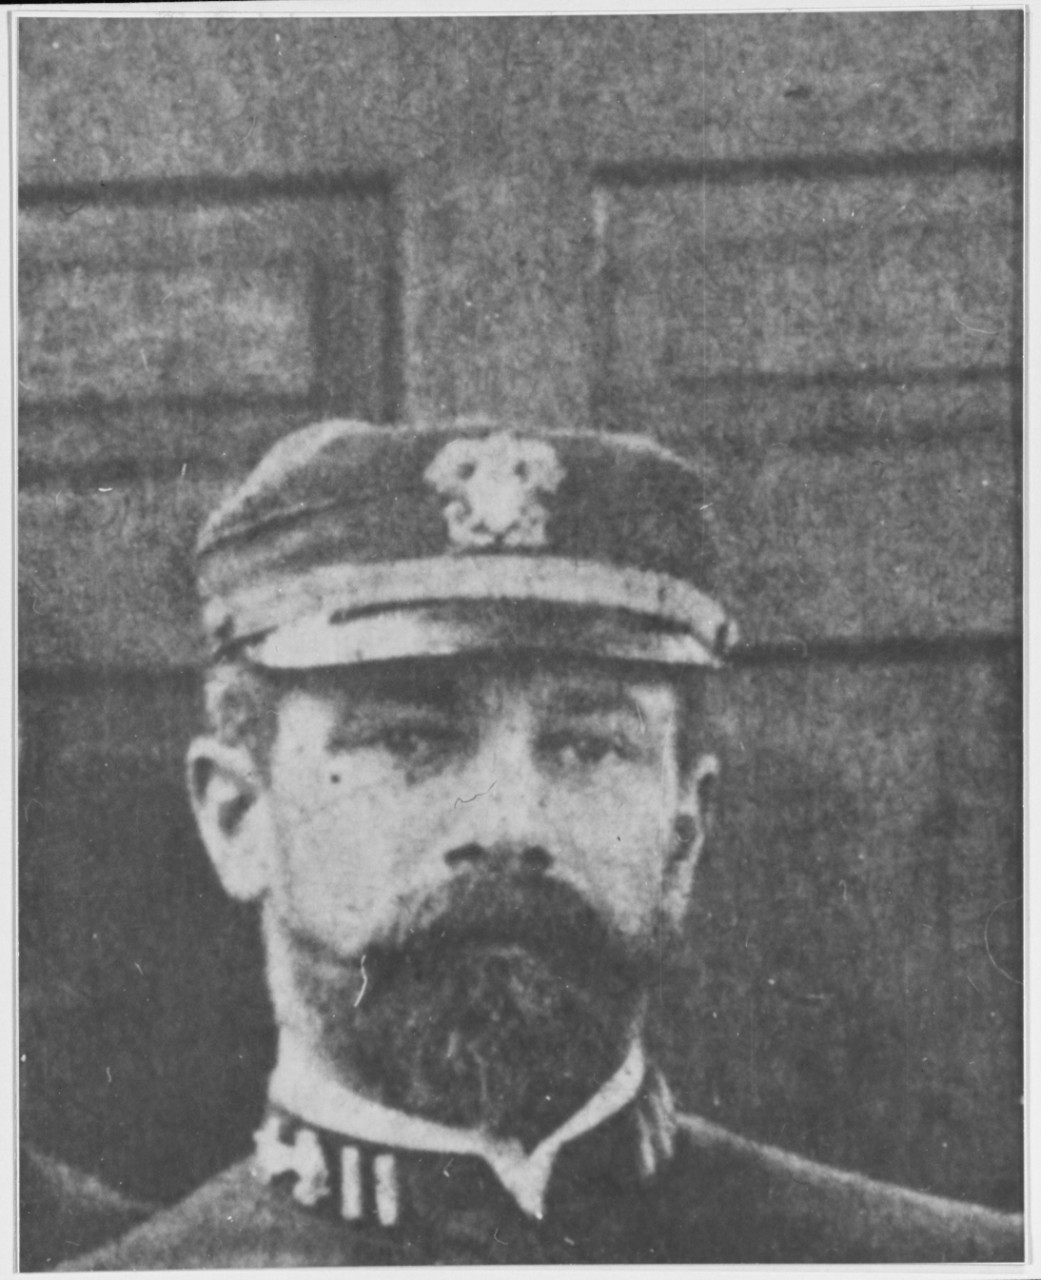 Lieutenant Alfred Reynolds, USN